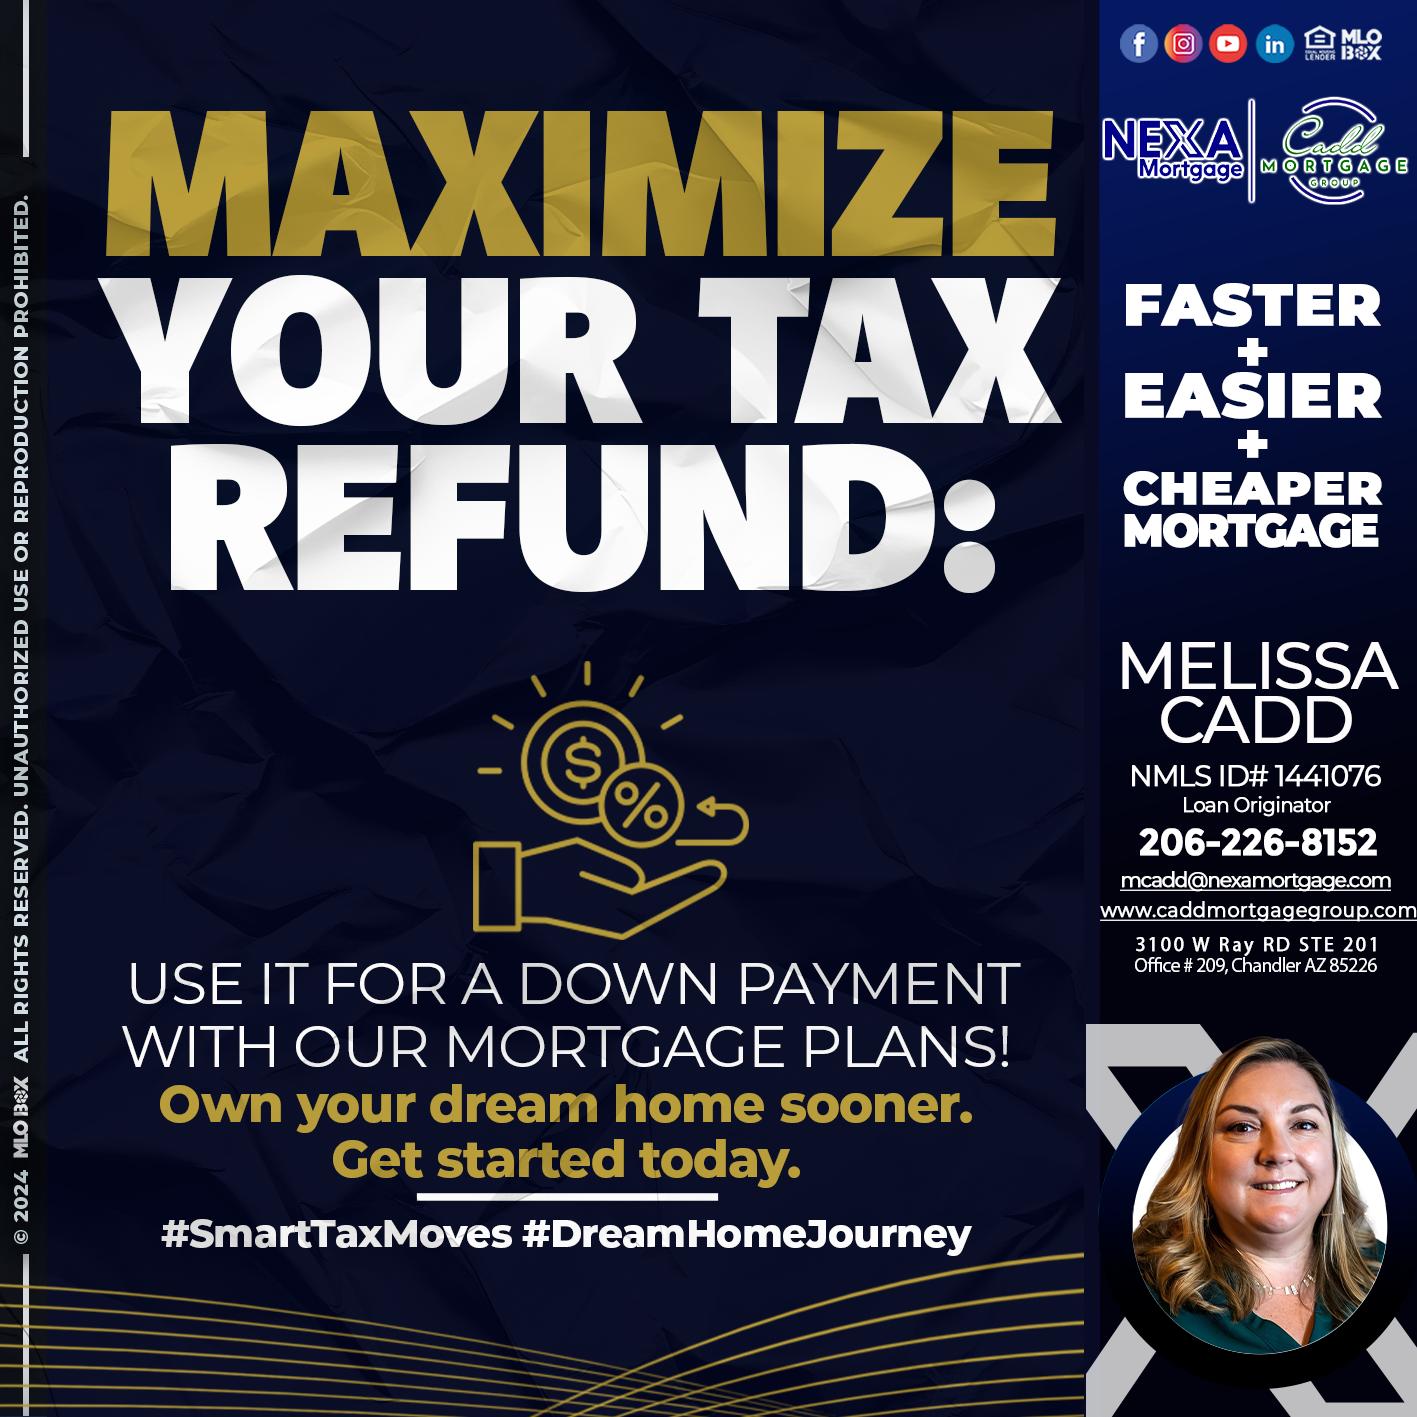 maximize - Melissa Cadd -Loan Originator